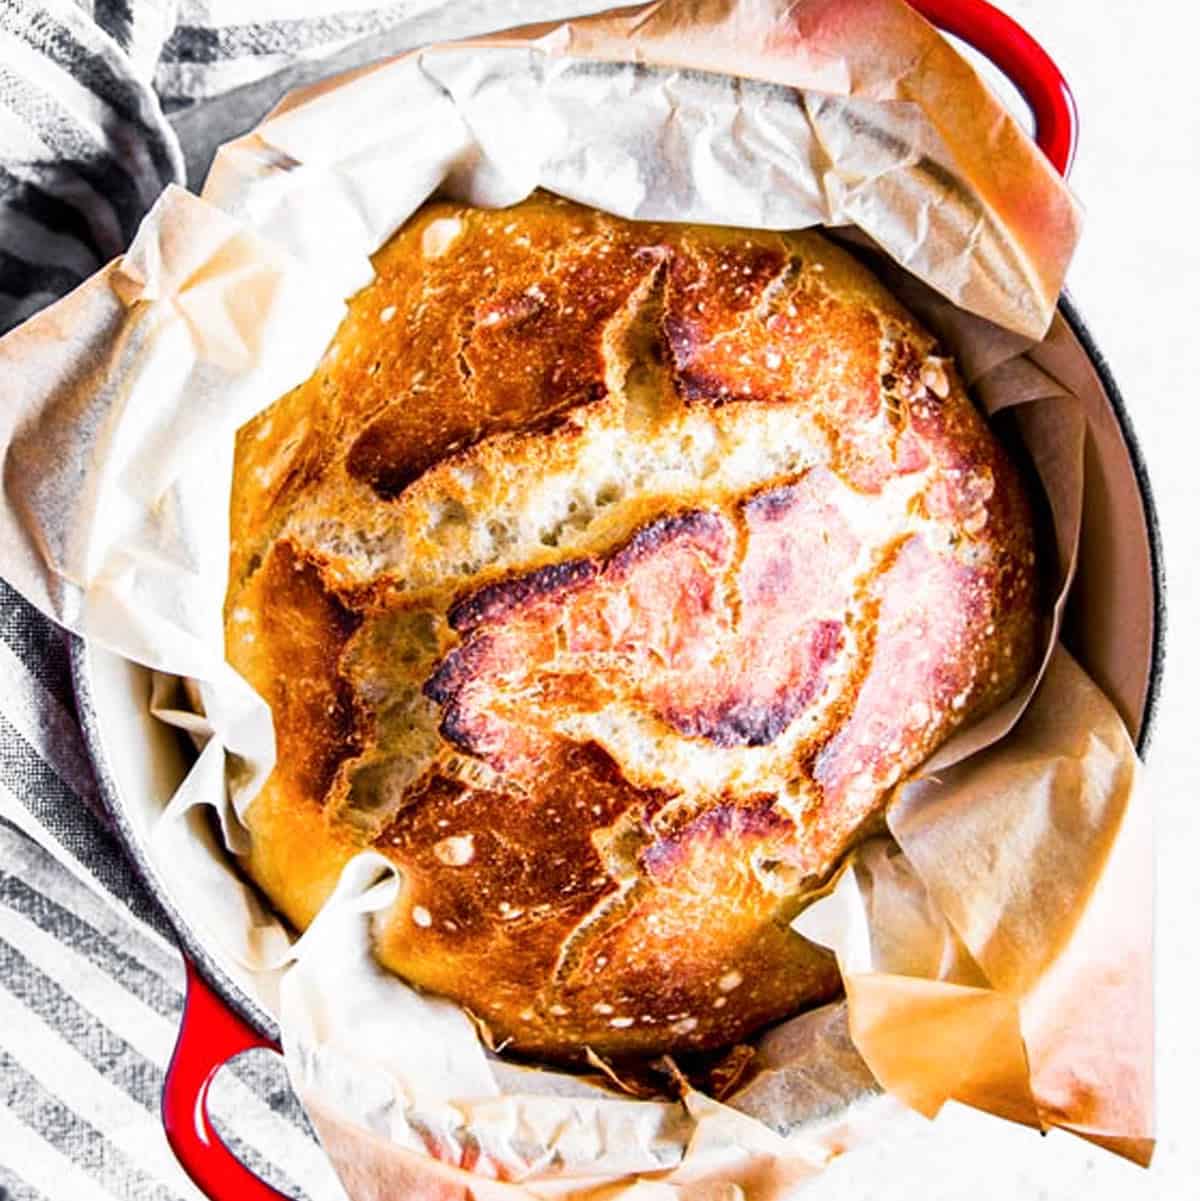 https://www.savorynothings.com/wp-content/uploads/2019/09/no-knead-bread-recipe-image-sq.jpg